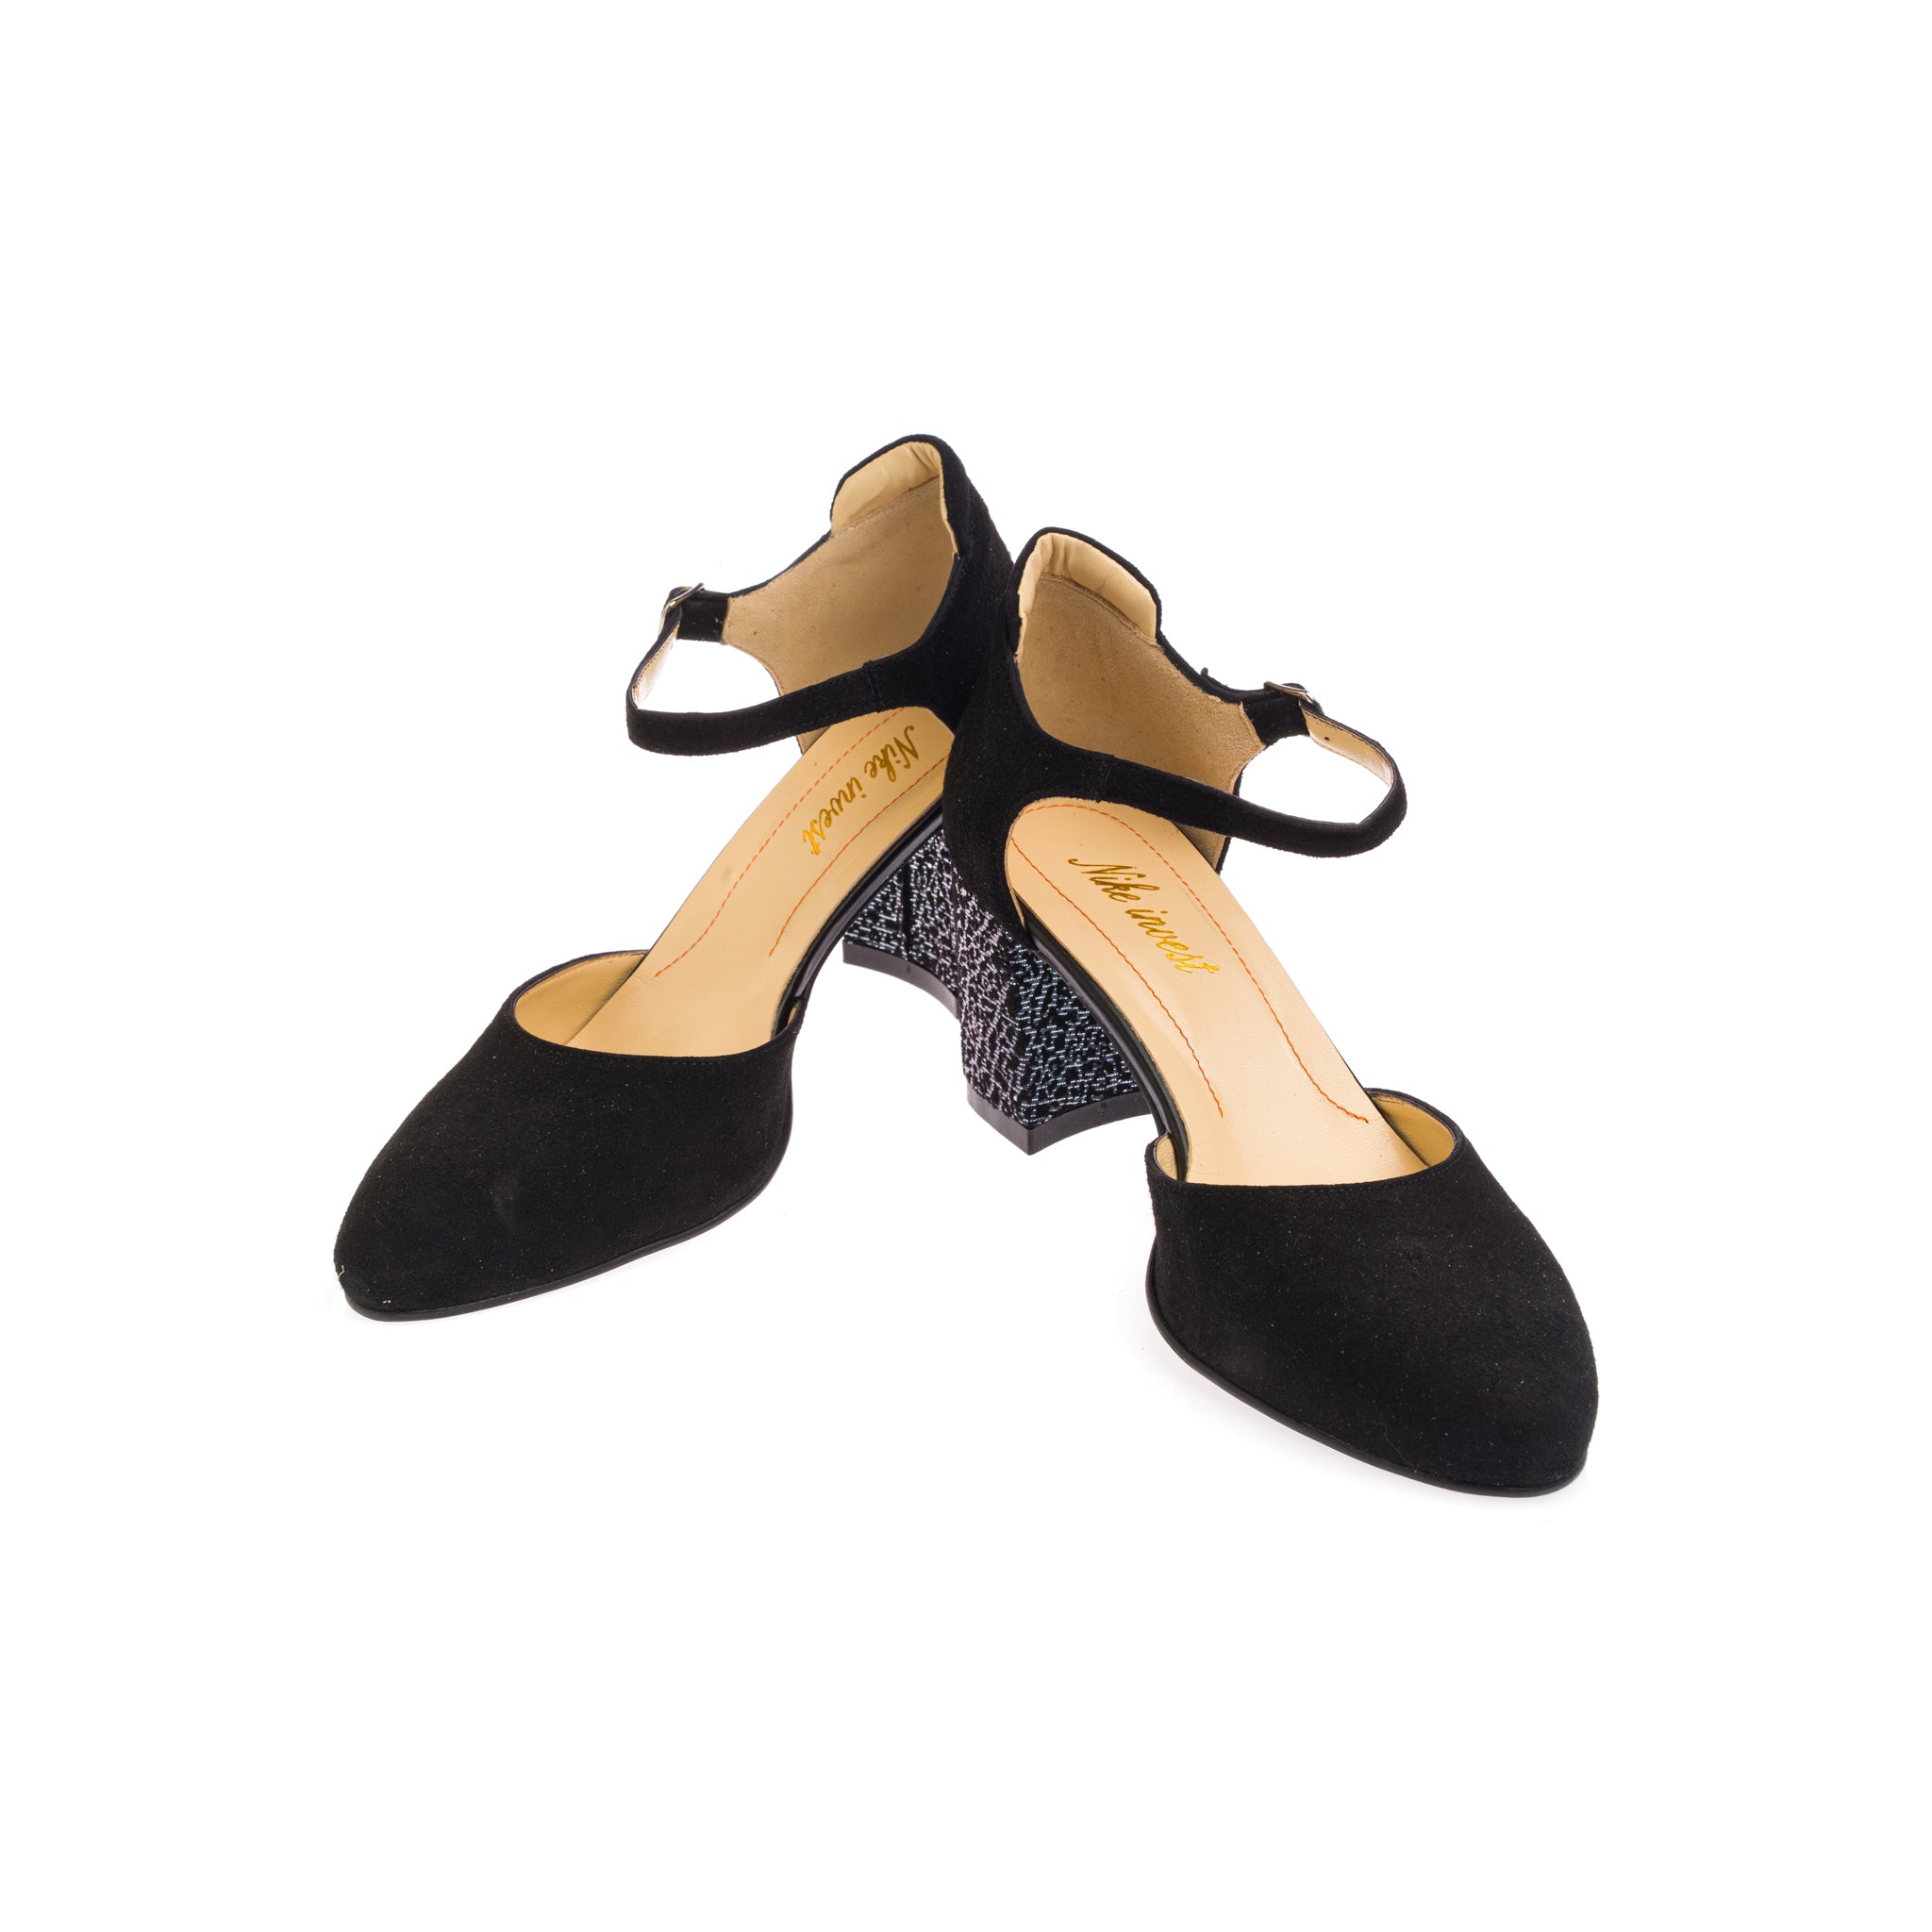 Pantofi Eleganti Dama din piele Naturala,Annet,negri